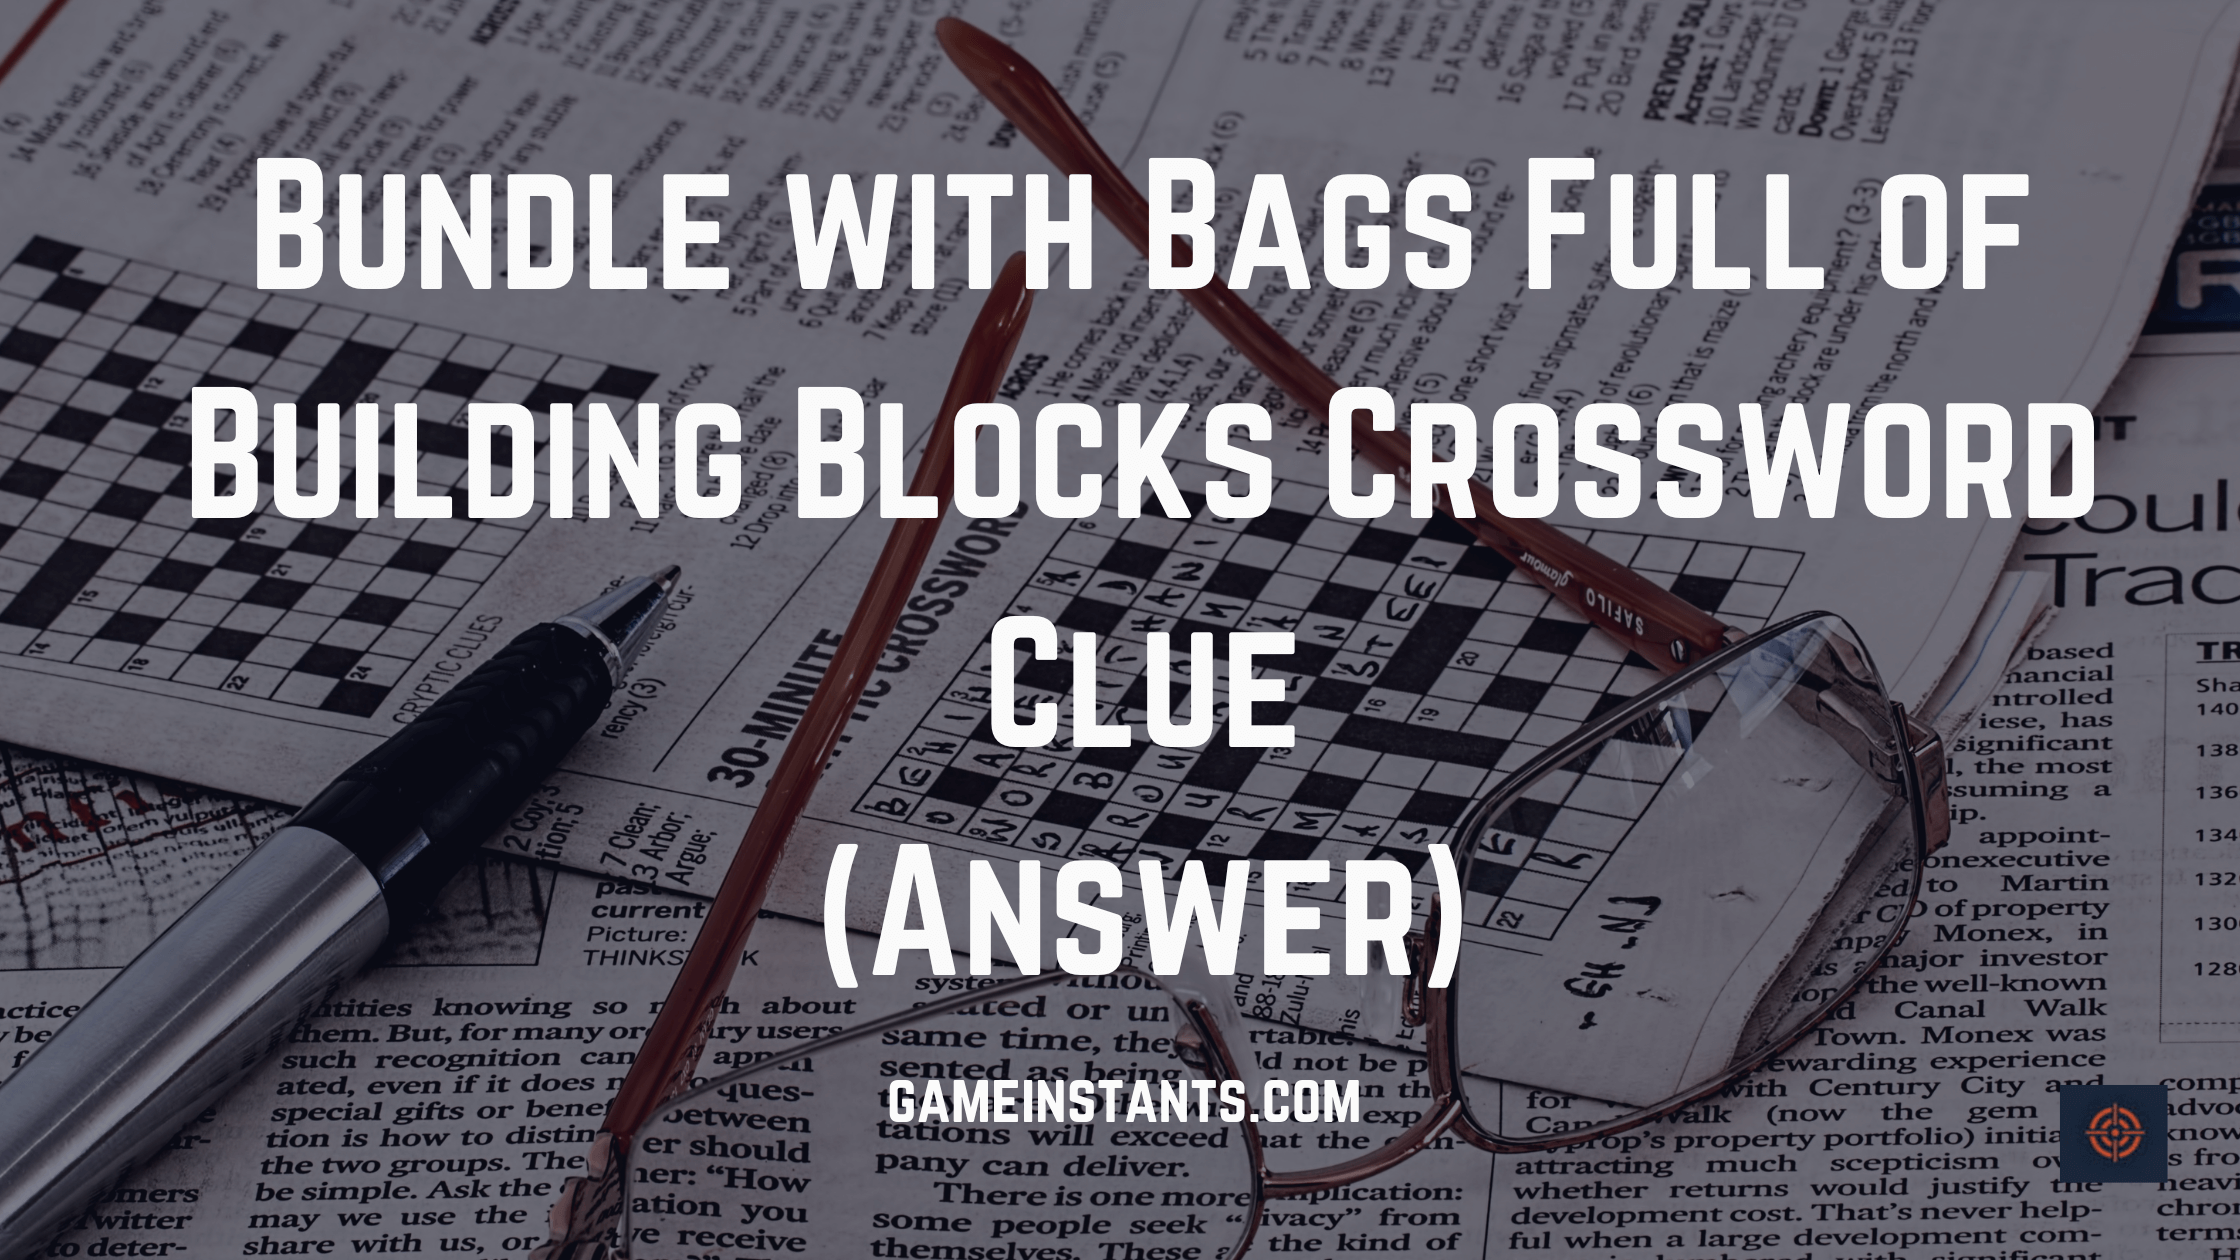 Bundle with Bags Full of Building Blocks Crossword